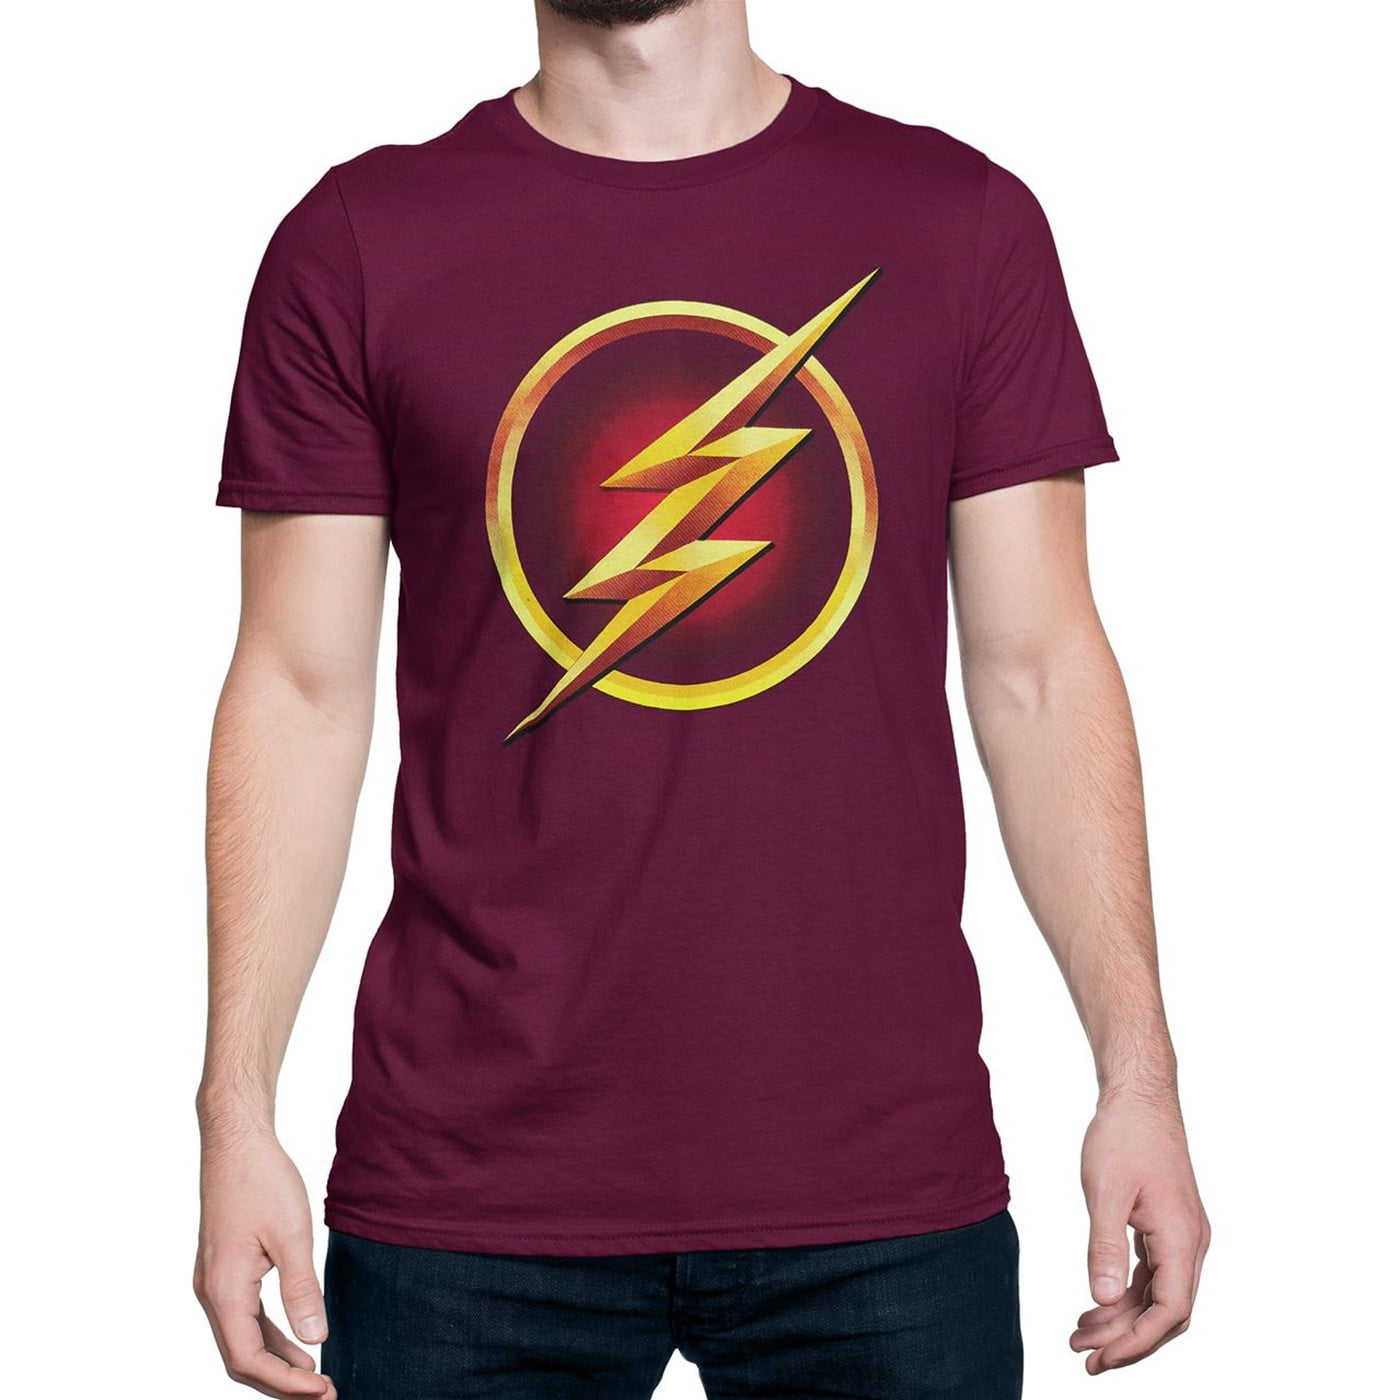 Star Labs футболка. Футболка с.эмблемой.Флэша. Одежда с символикой звезды. Flash shop